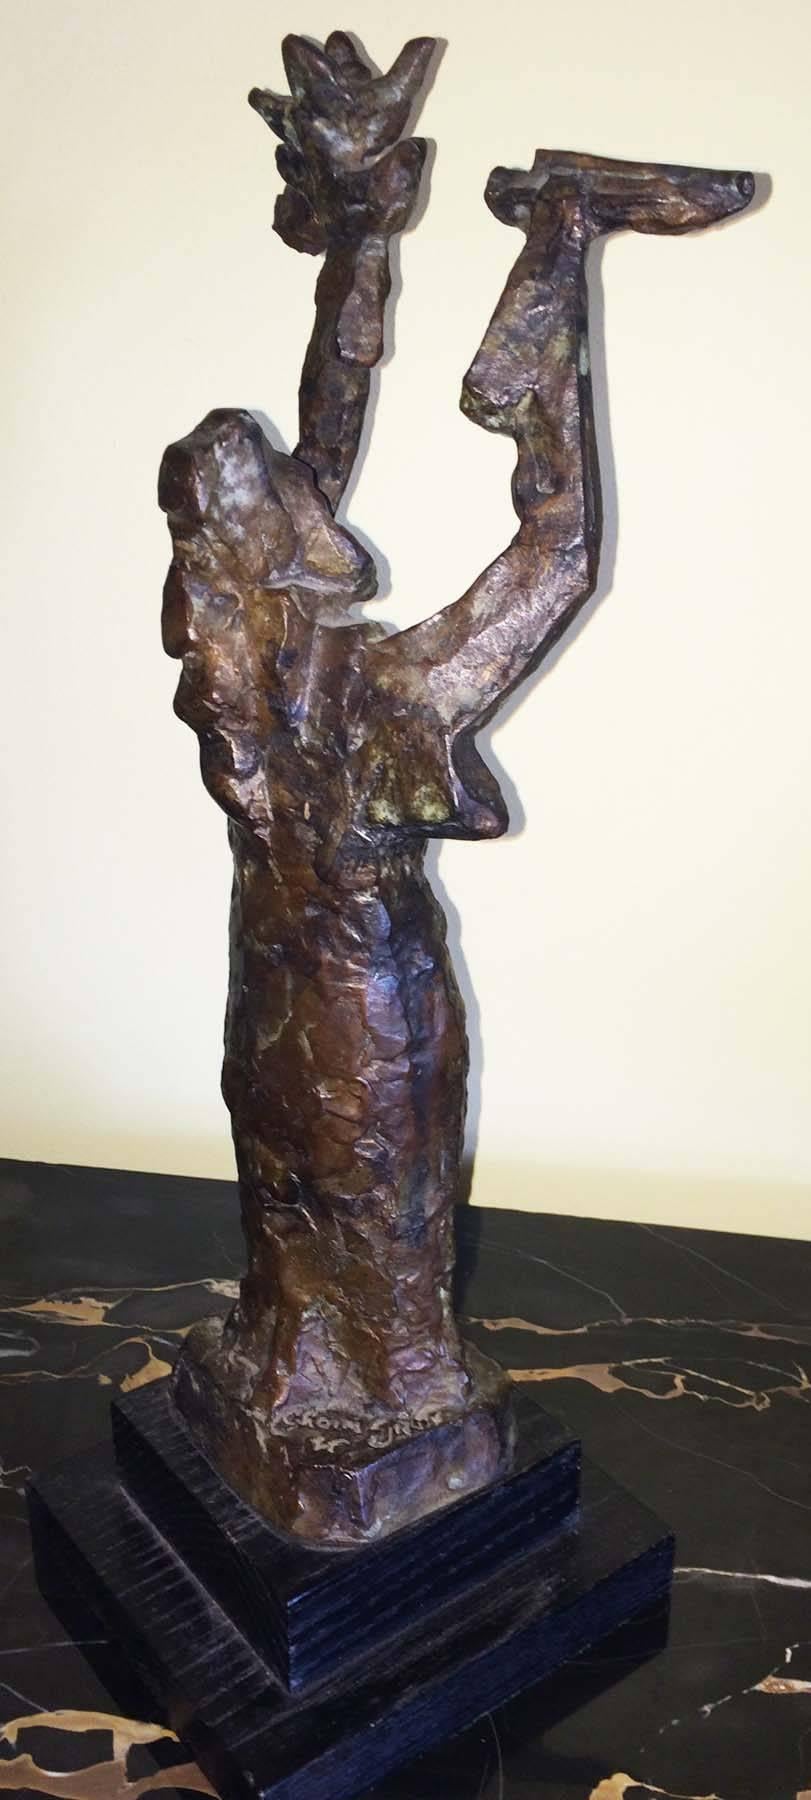 Isaiah - Sculpture by Chaim Gross